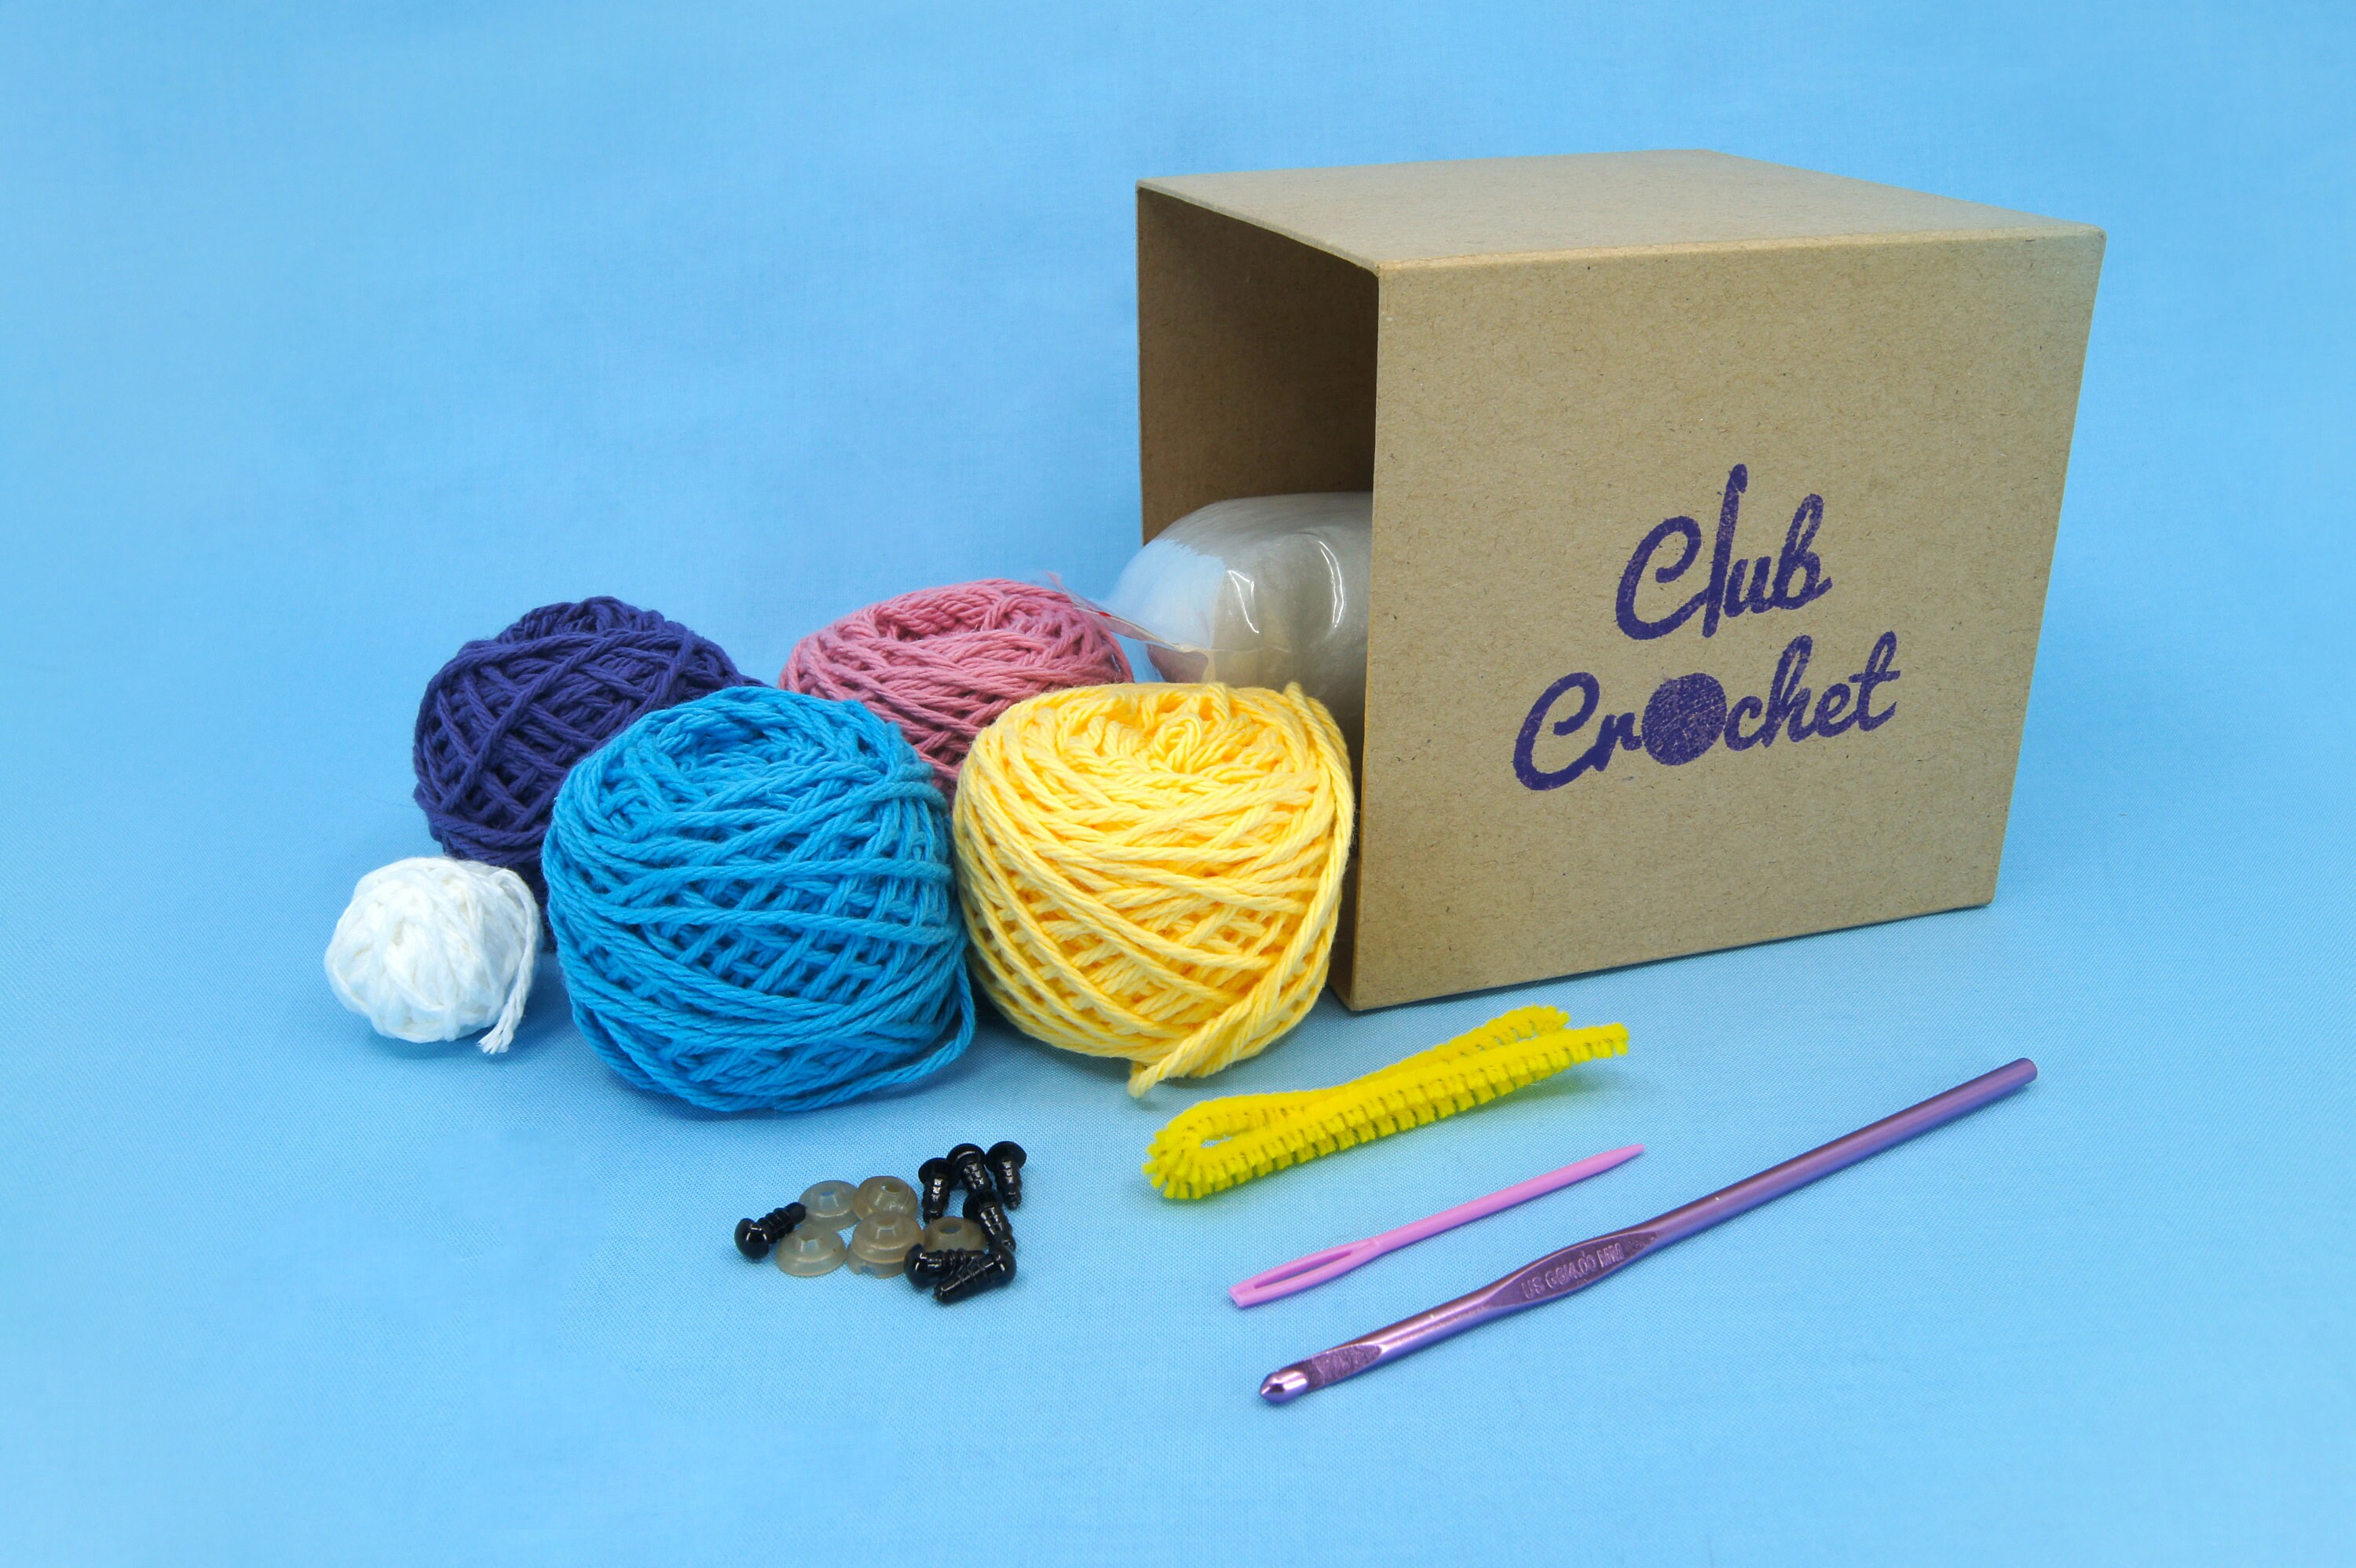 Dinosaur Bundle Amigurumi Crochet Kit